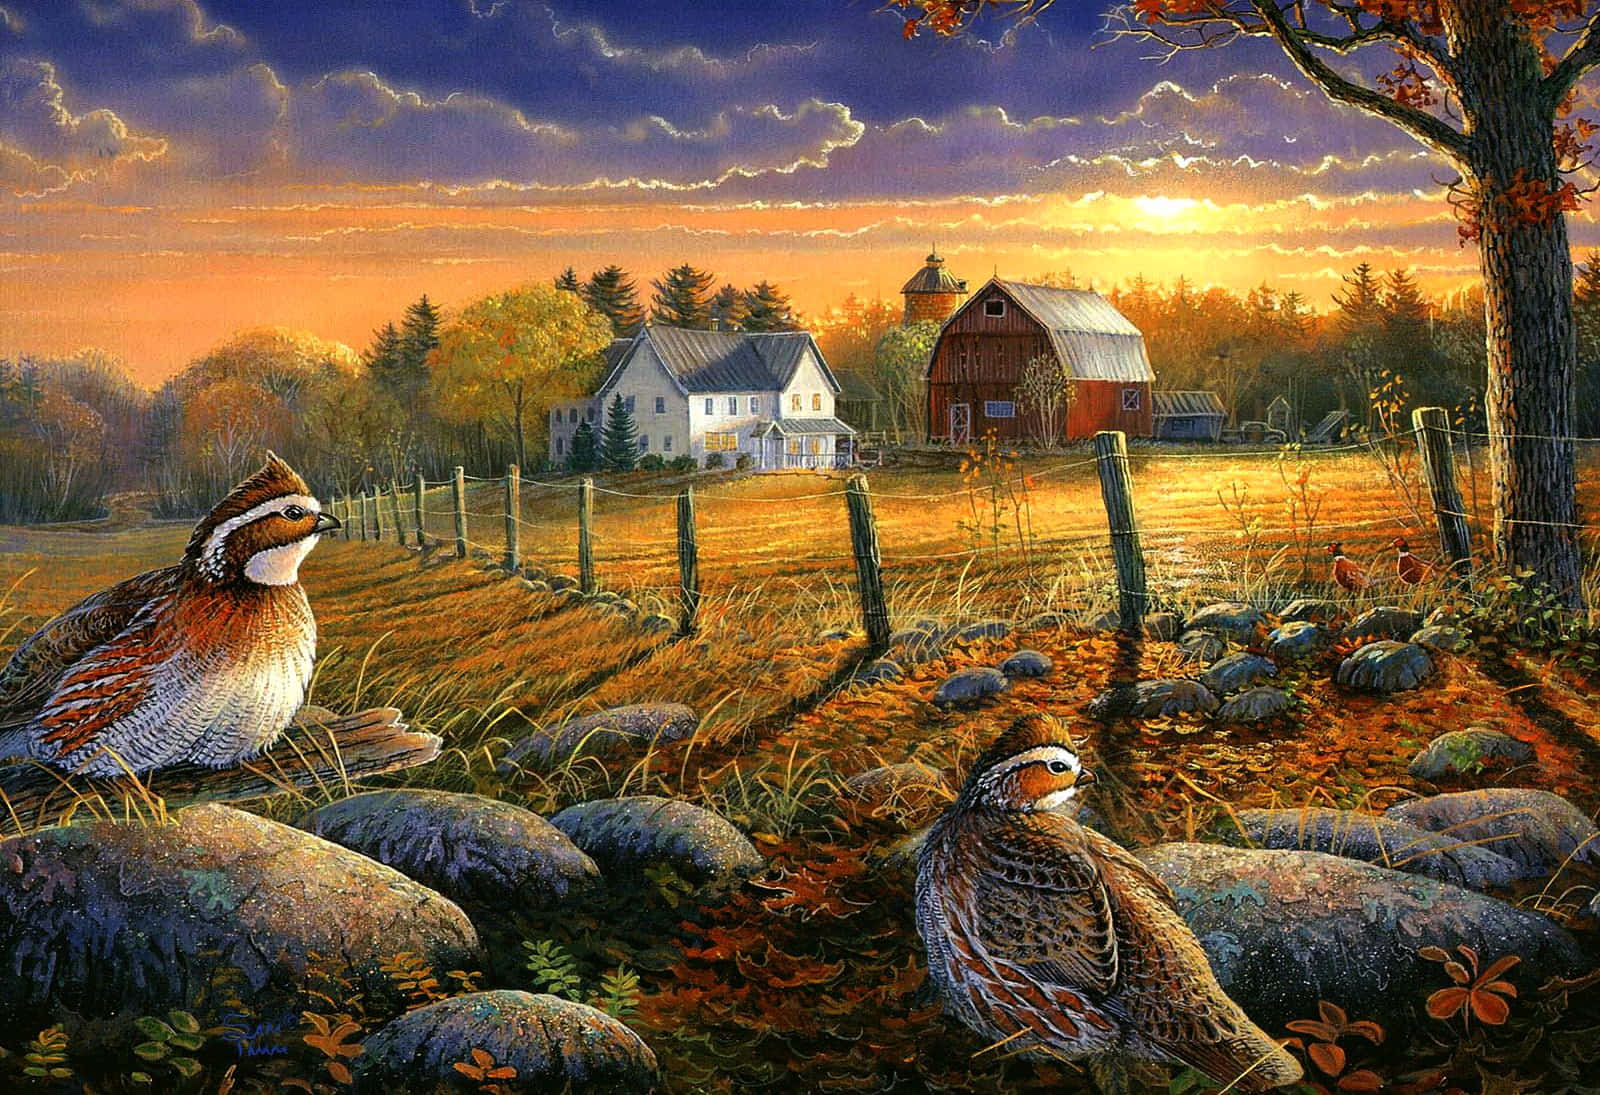 Enchanting Fall Country Landscape Wallpaper